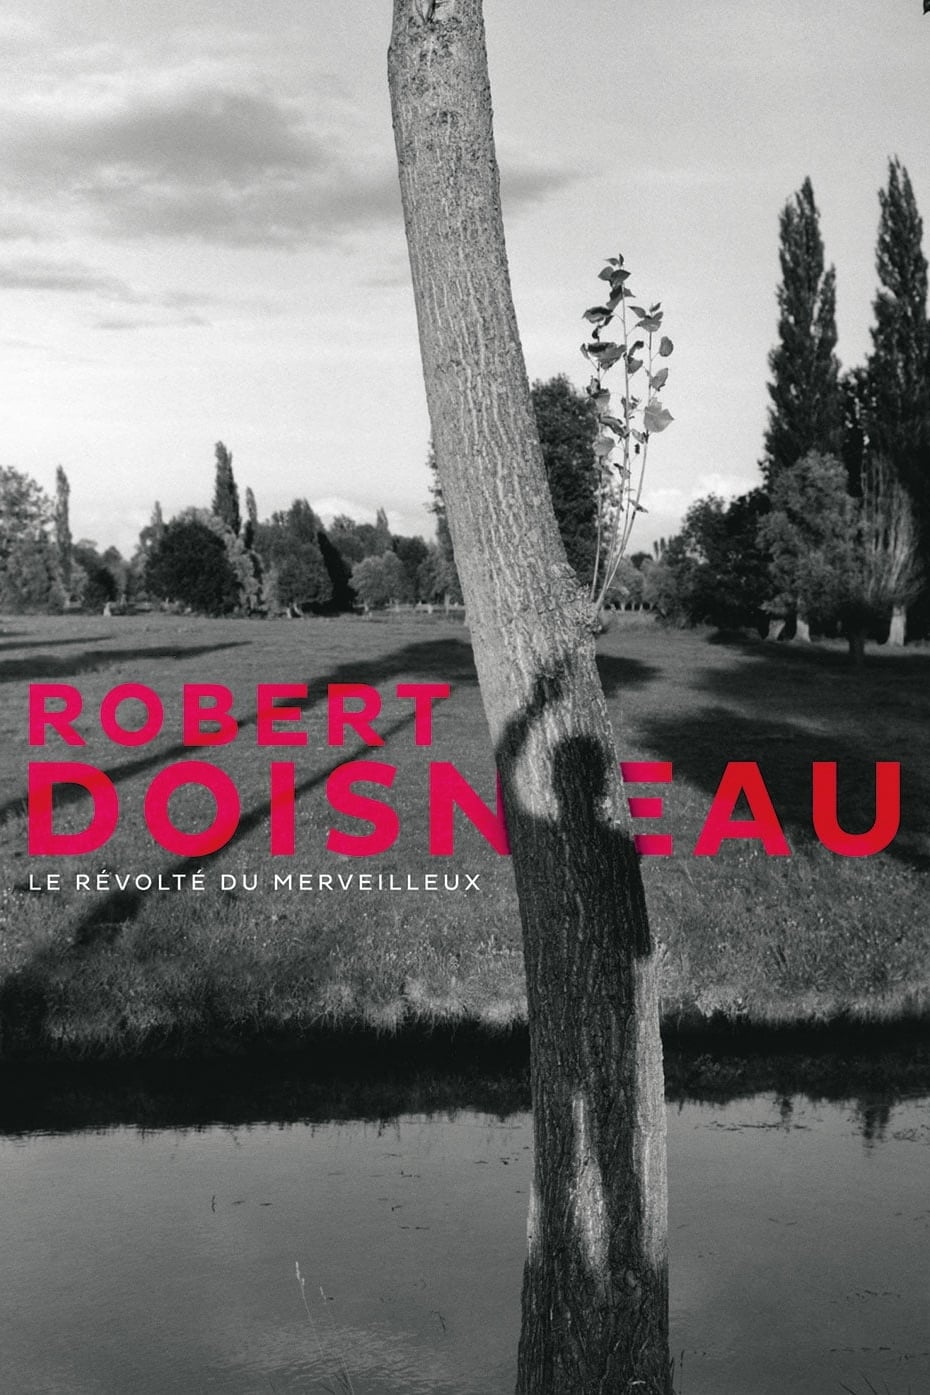 Robert Doisneau: Through the Lens